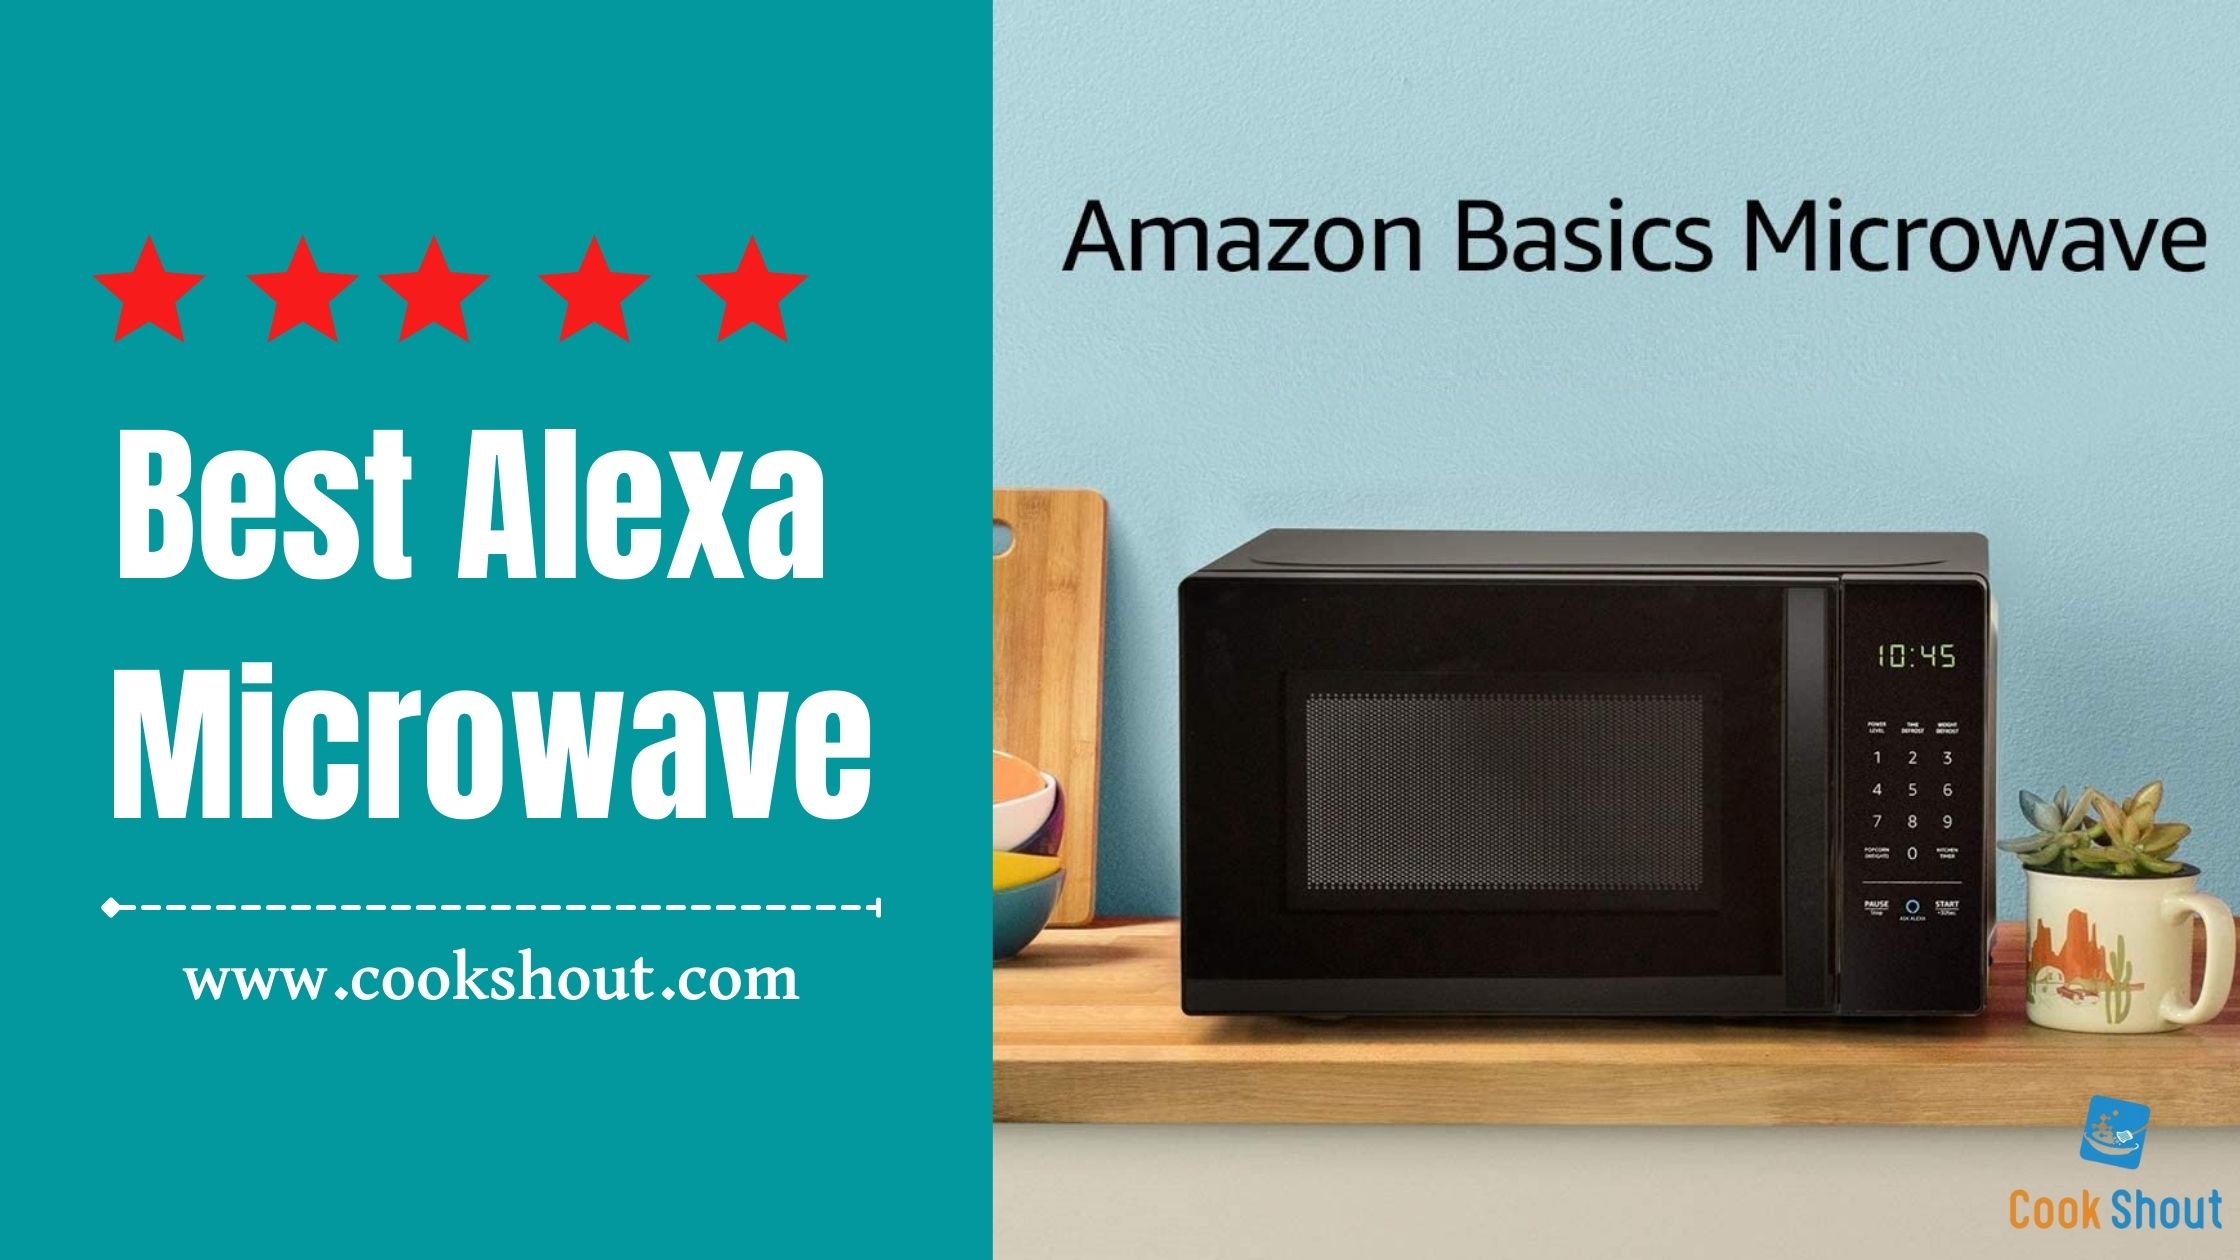 Best Alexa Microwave